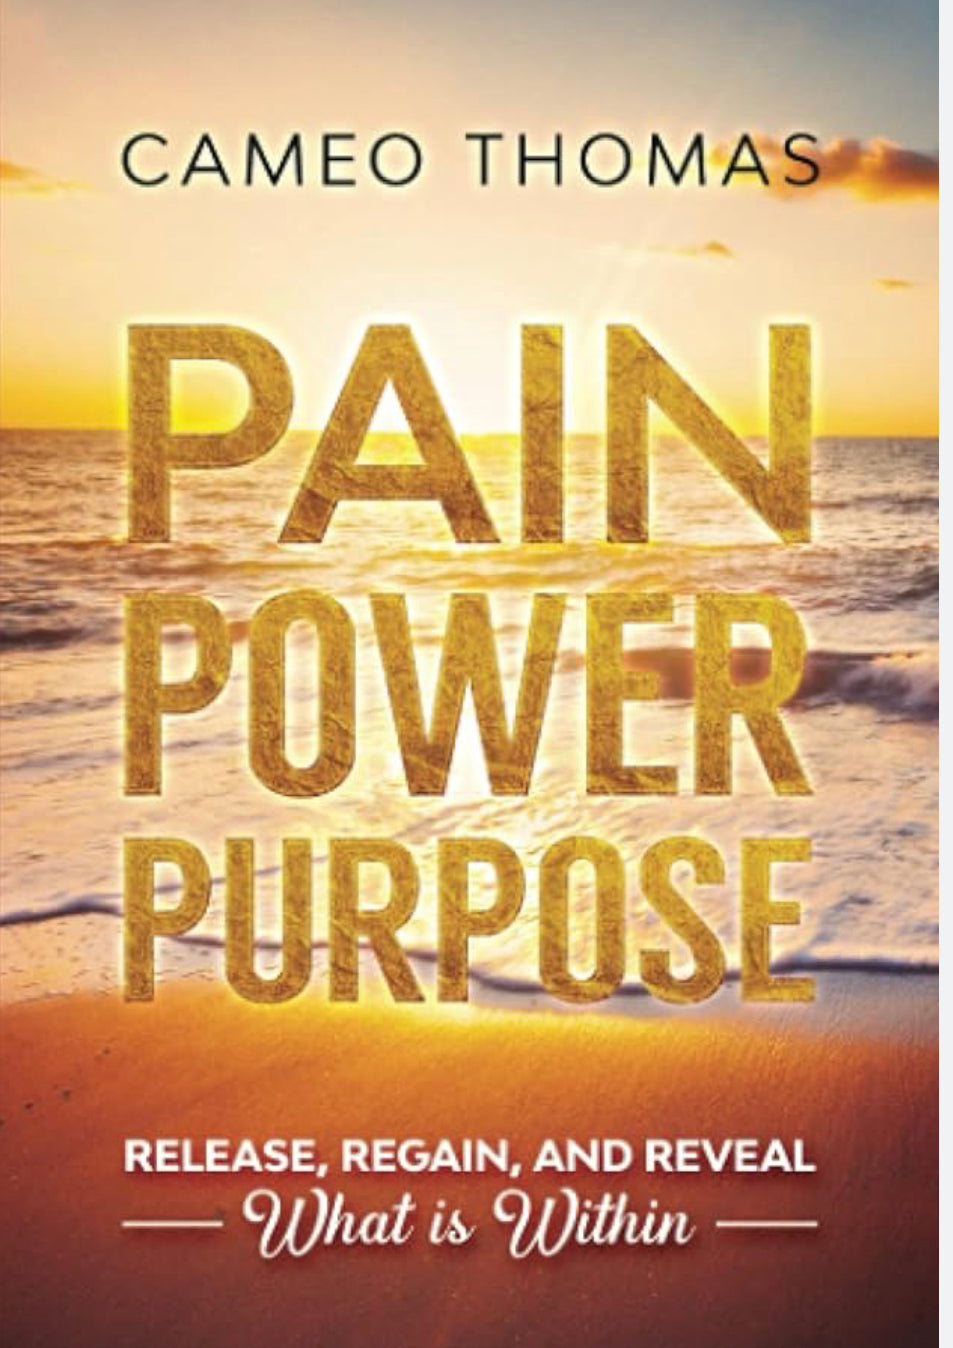 Pain Power Purpose